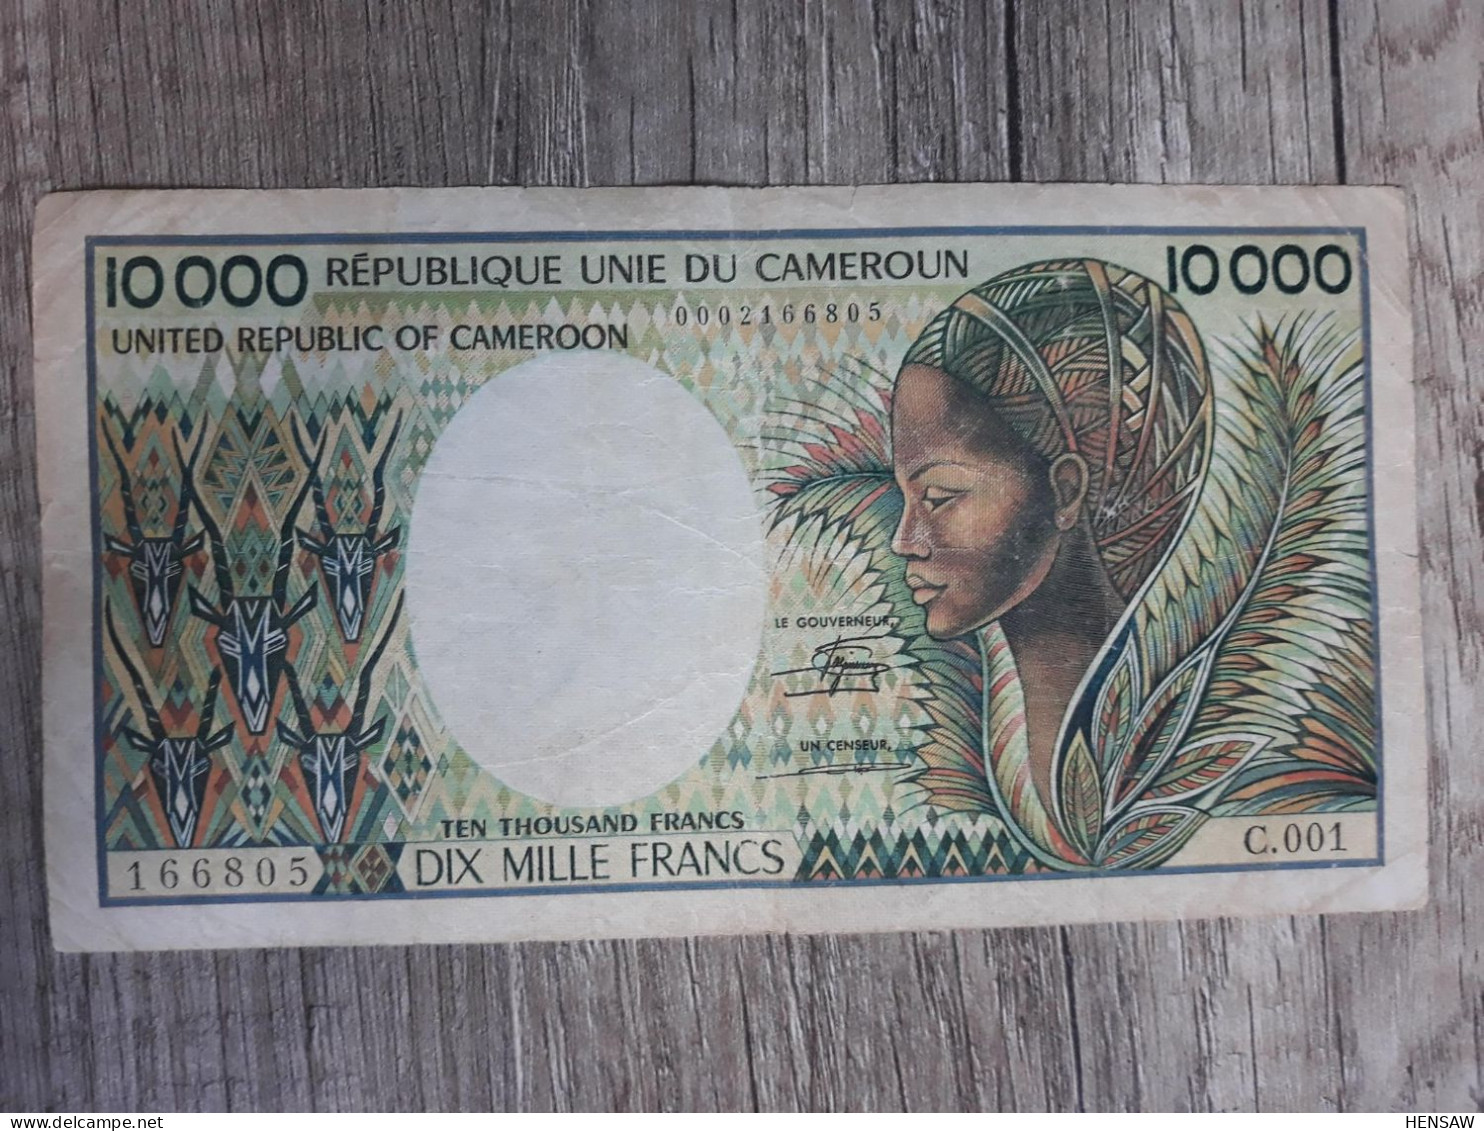 CAMEROON 10000 FRANCS 1981 ND P 20 USED USADO - Cameroun